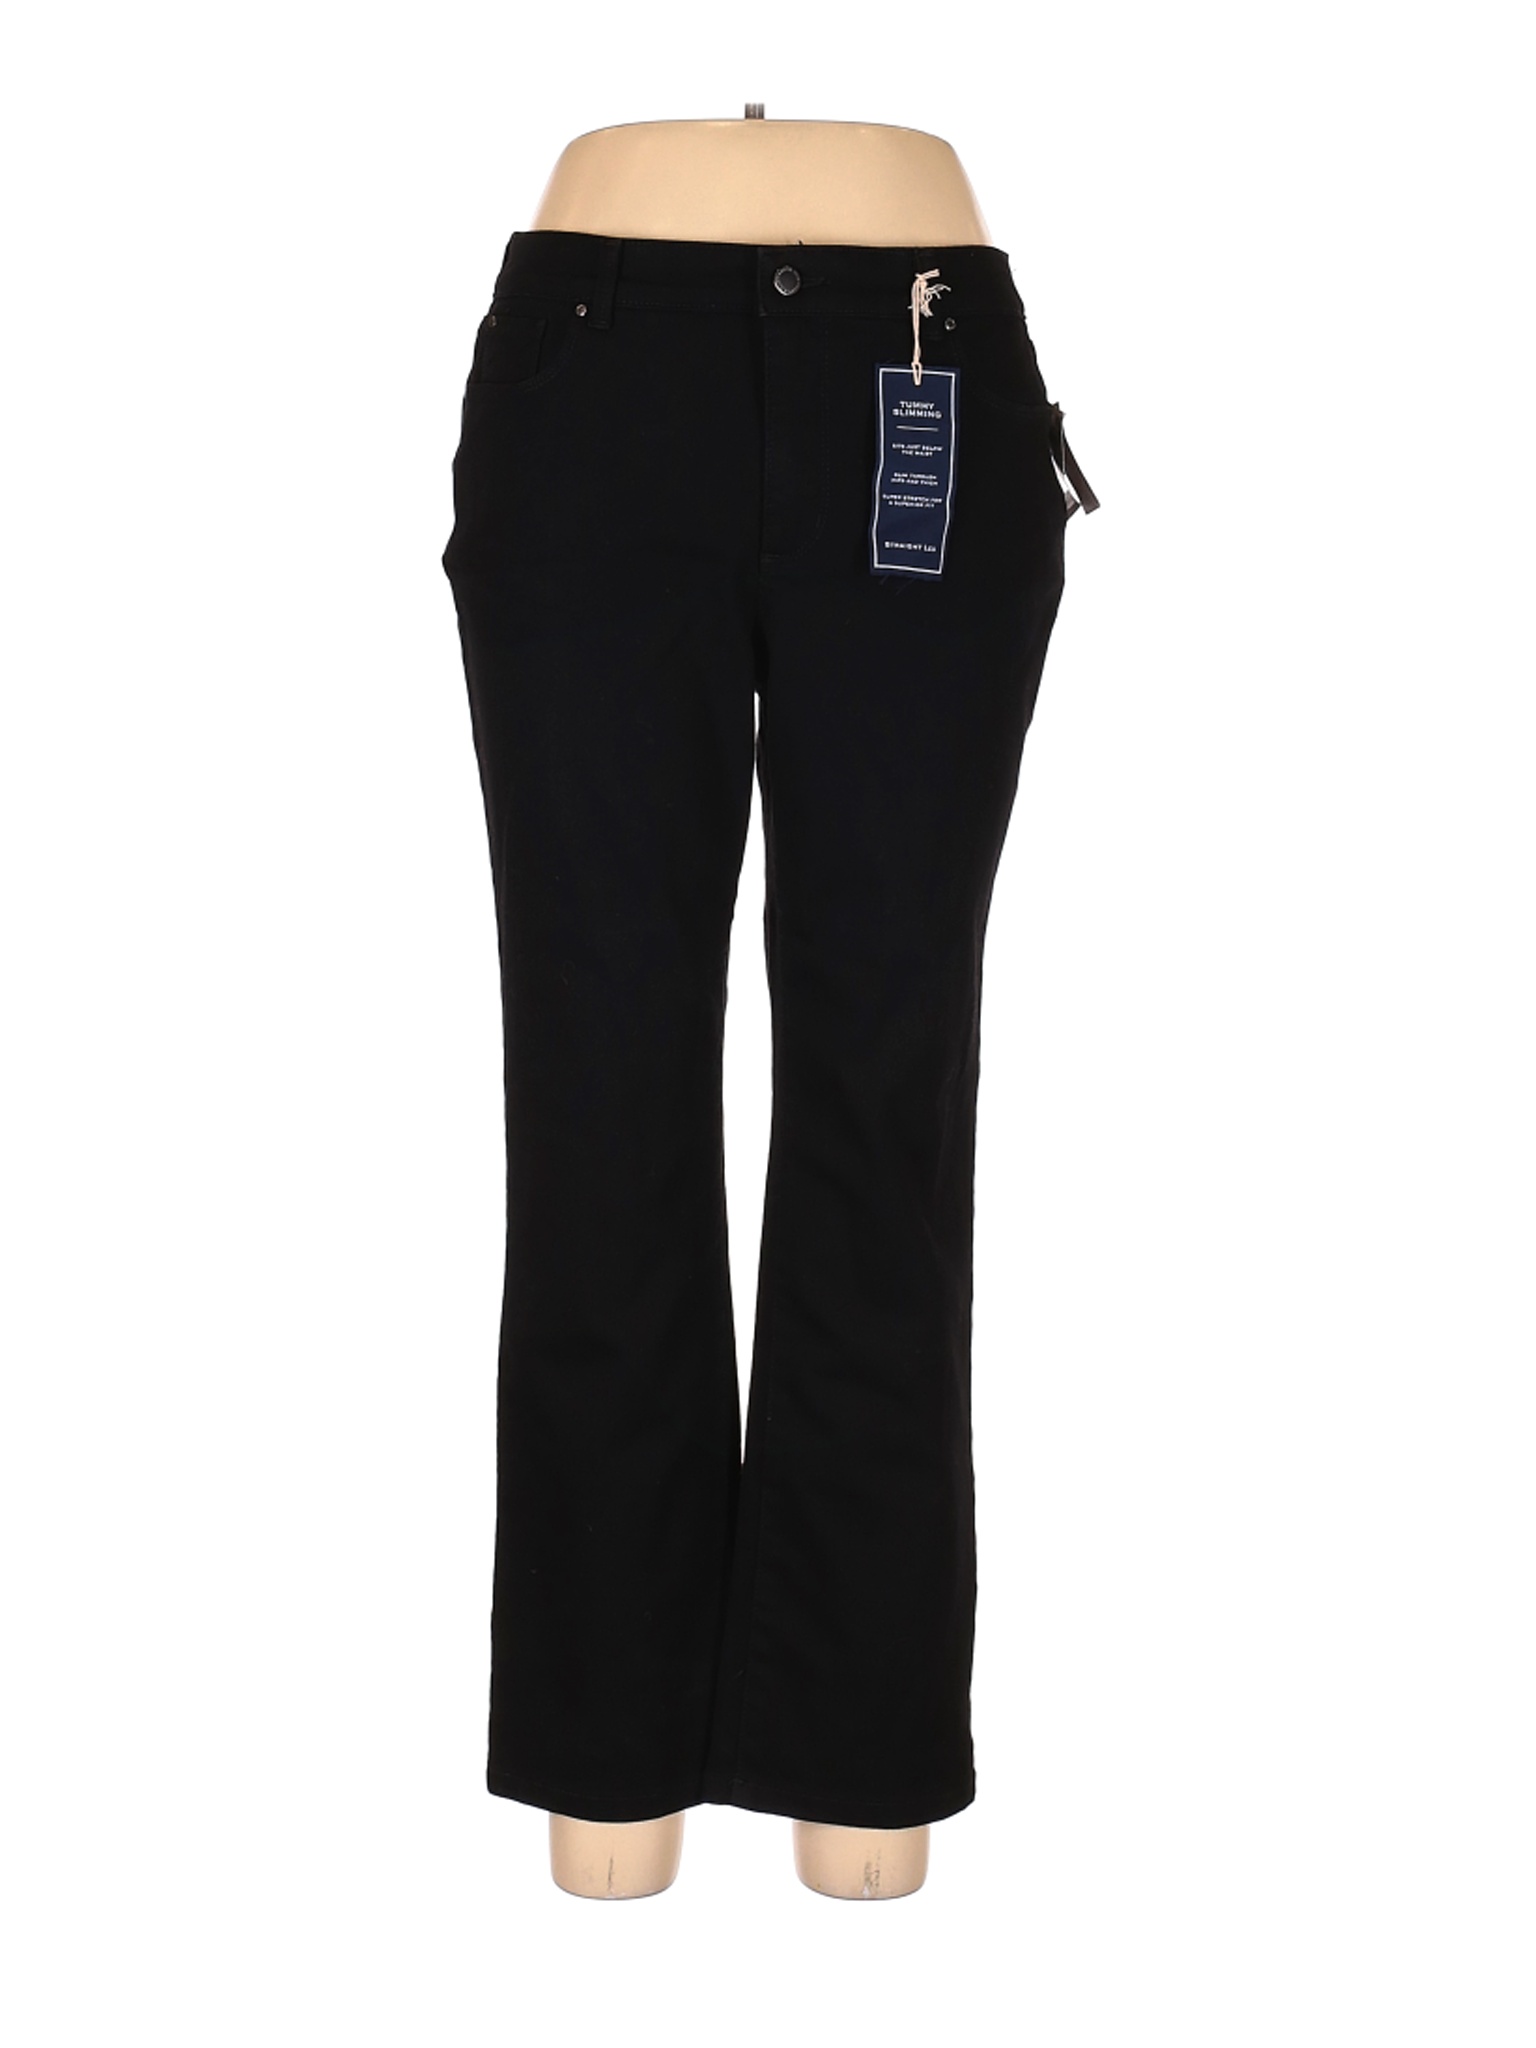 NWT Charter Club Women Black Jeans 16 | eBay